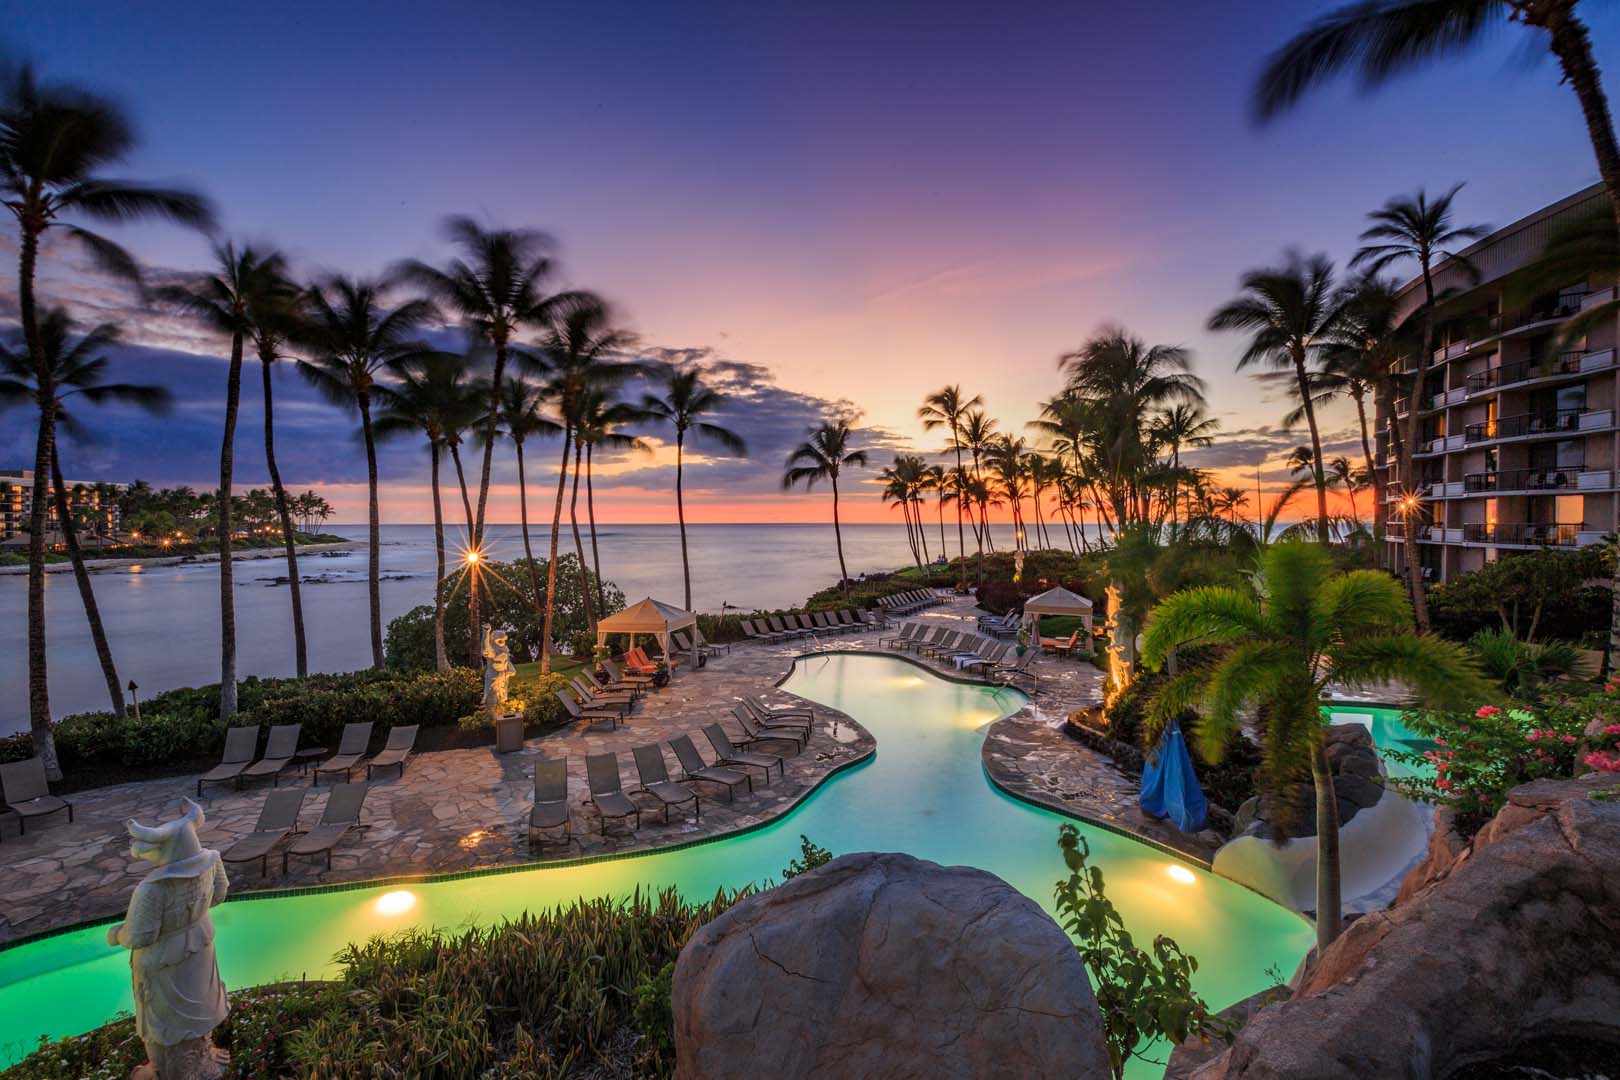 Hilton Waikoloa Village Resort on Hawaii Island